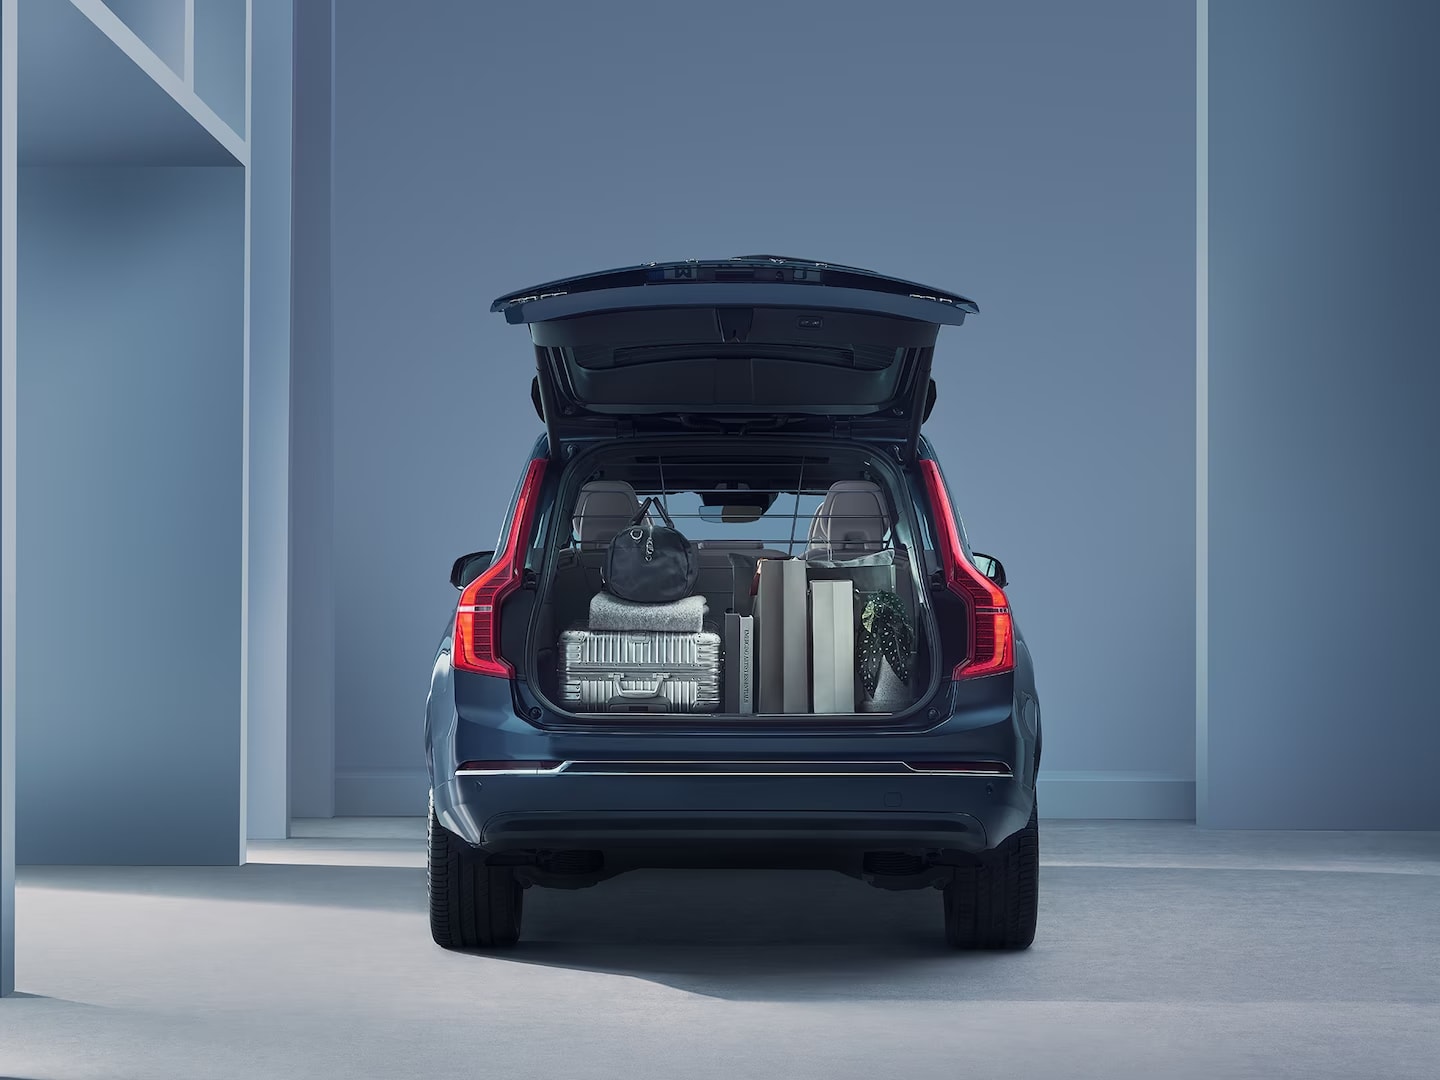 The boot of the Volvo XC90 mild hybrid SUV optimises storage capacity.